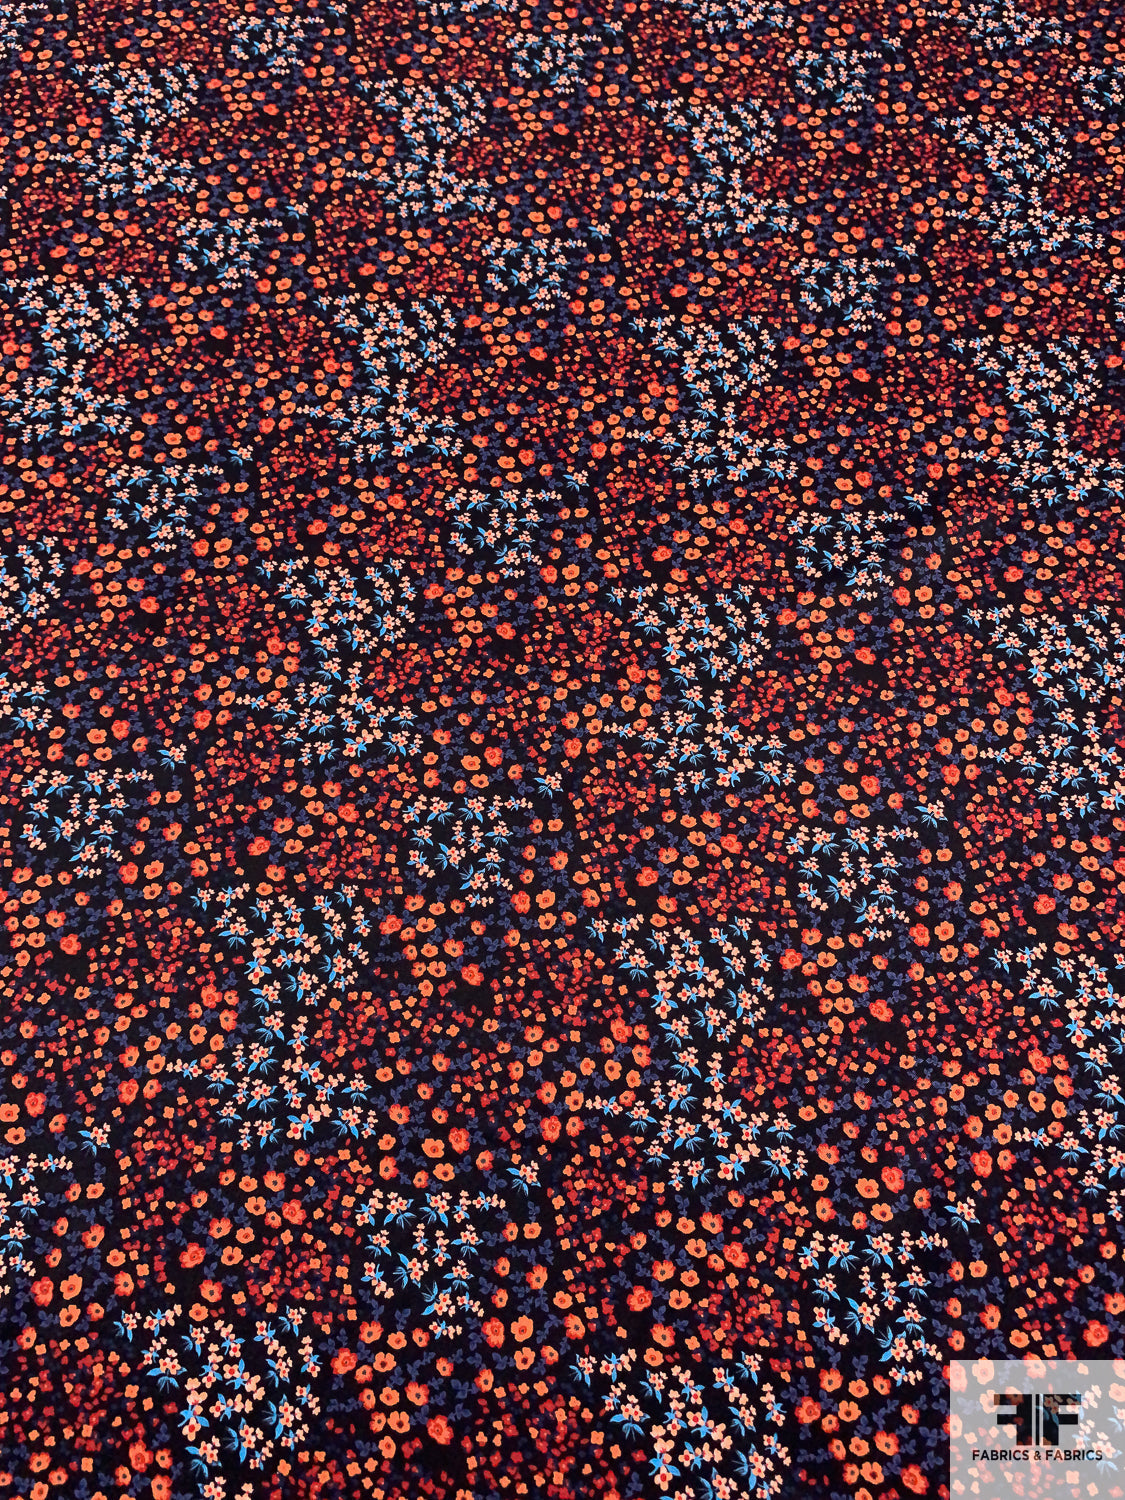 Ditsy Floral Printed Low-Sheen Polyester Charmeuse - Orange / Burnt Orange / Blues / Black